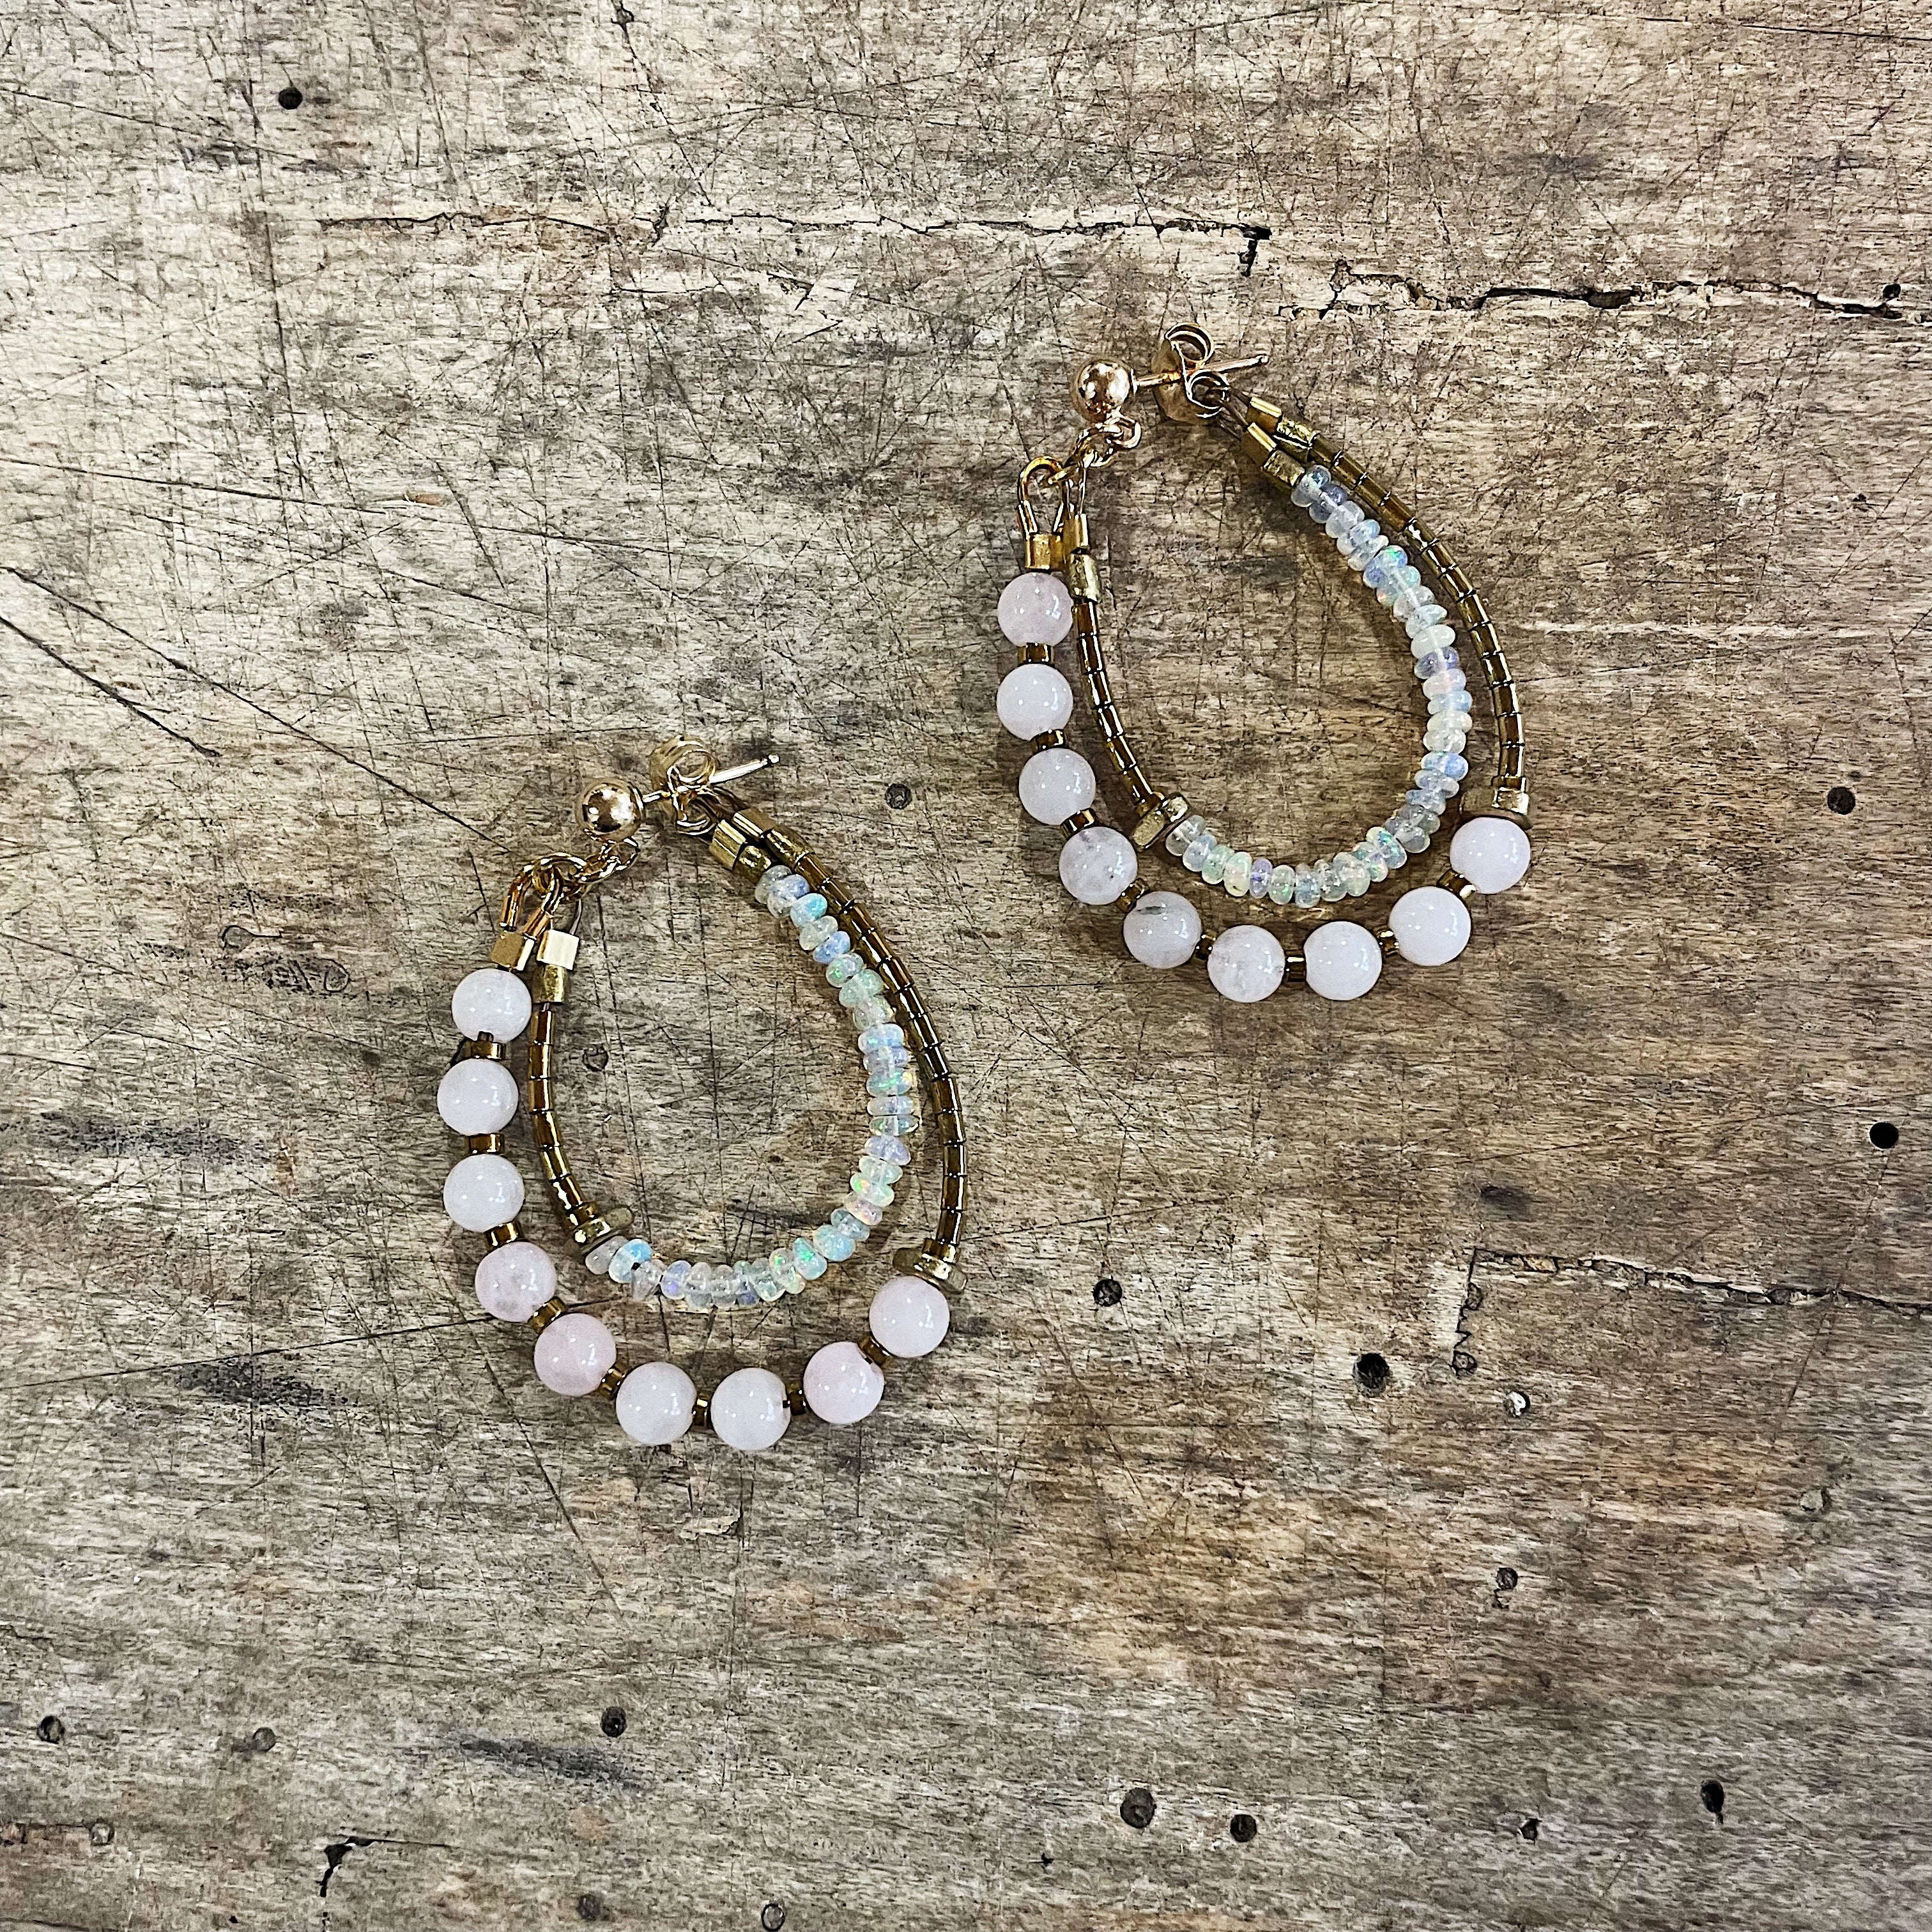 Hailey Gerrits // Leilani Earrings Rose Quartz